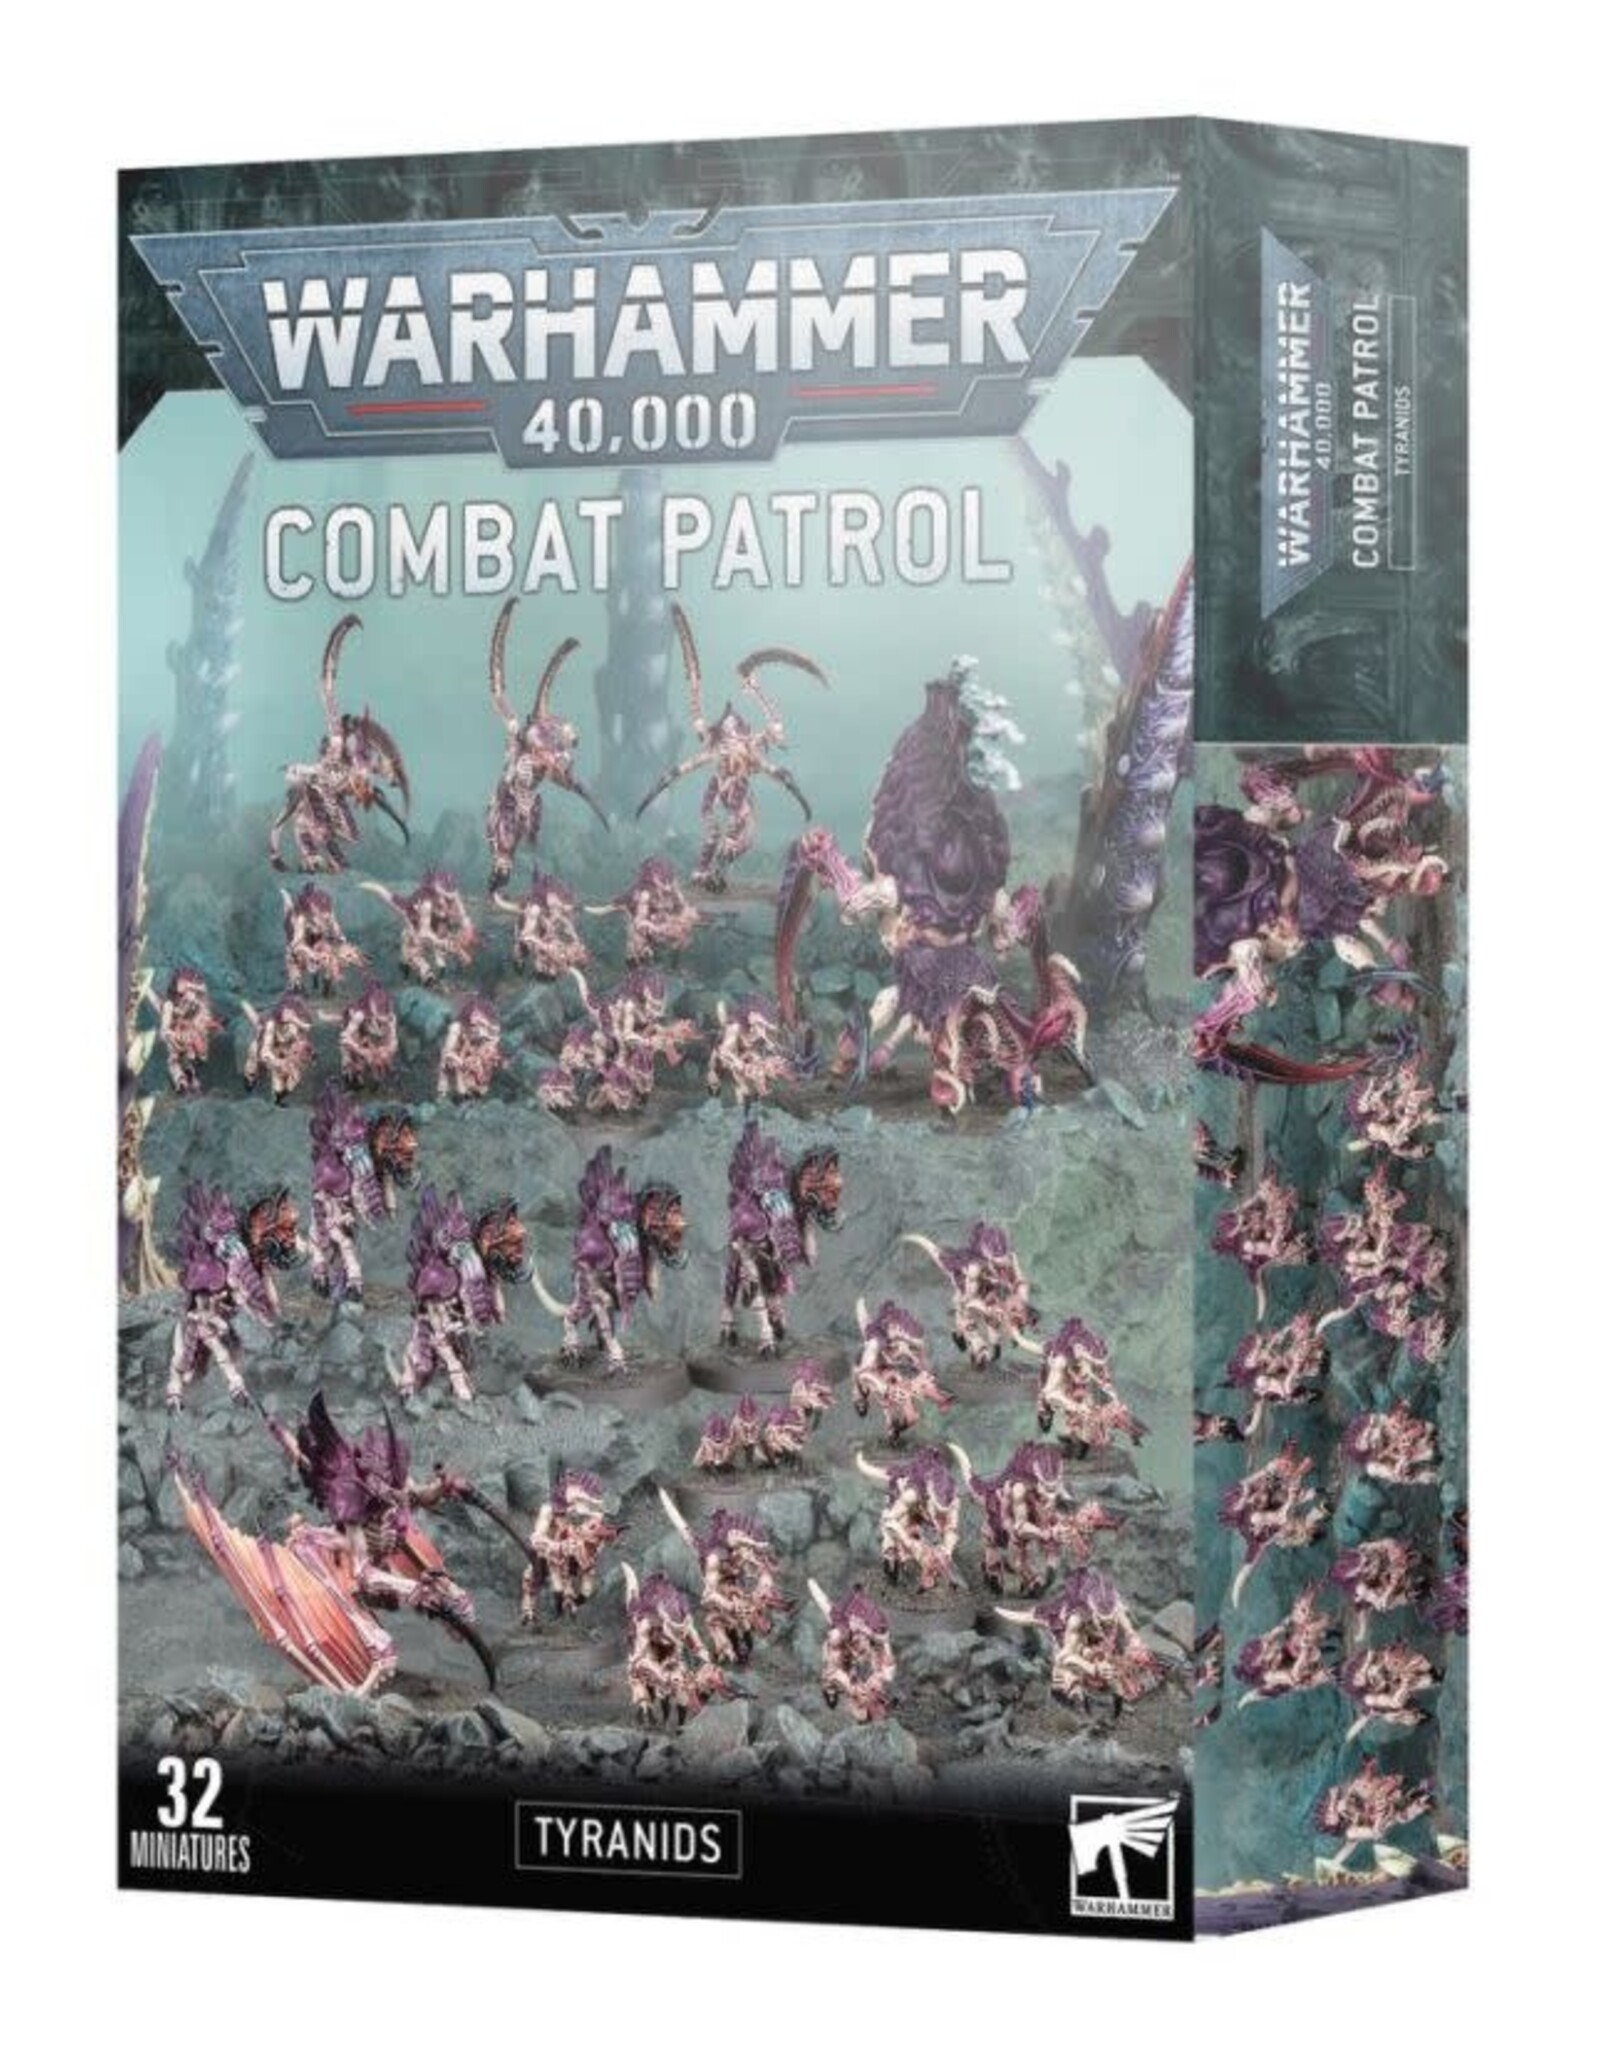 Warhammer 40k Combat Patrol: Tyranids